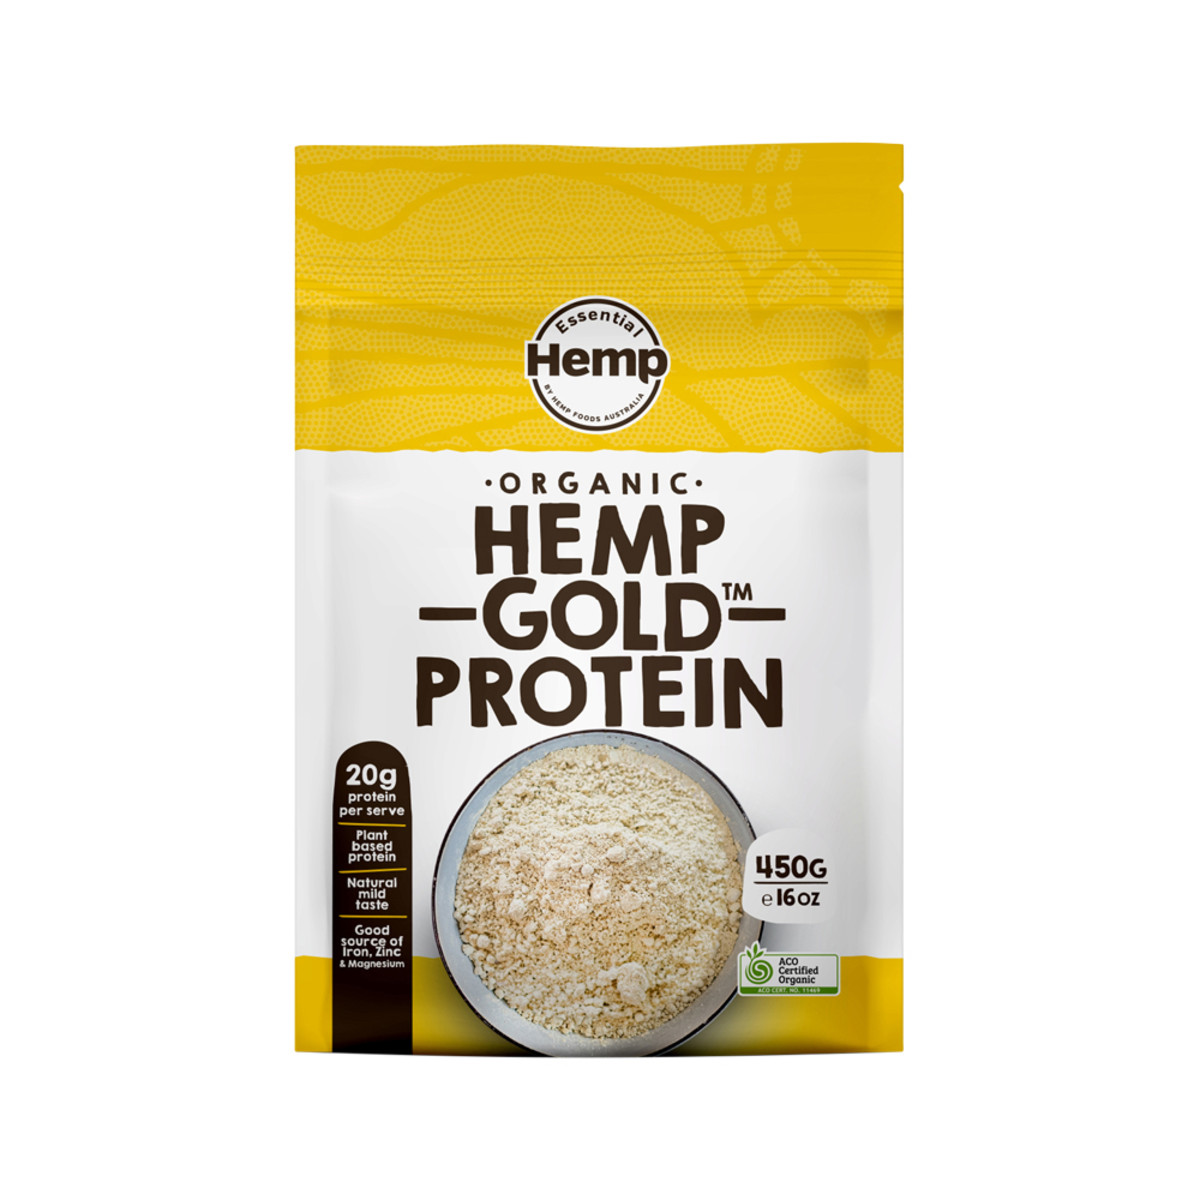 ESSENTIAL HEMP - Organic Hemp Protein Gold Powder 450g